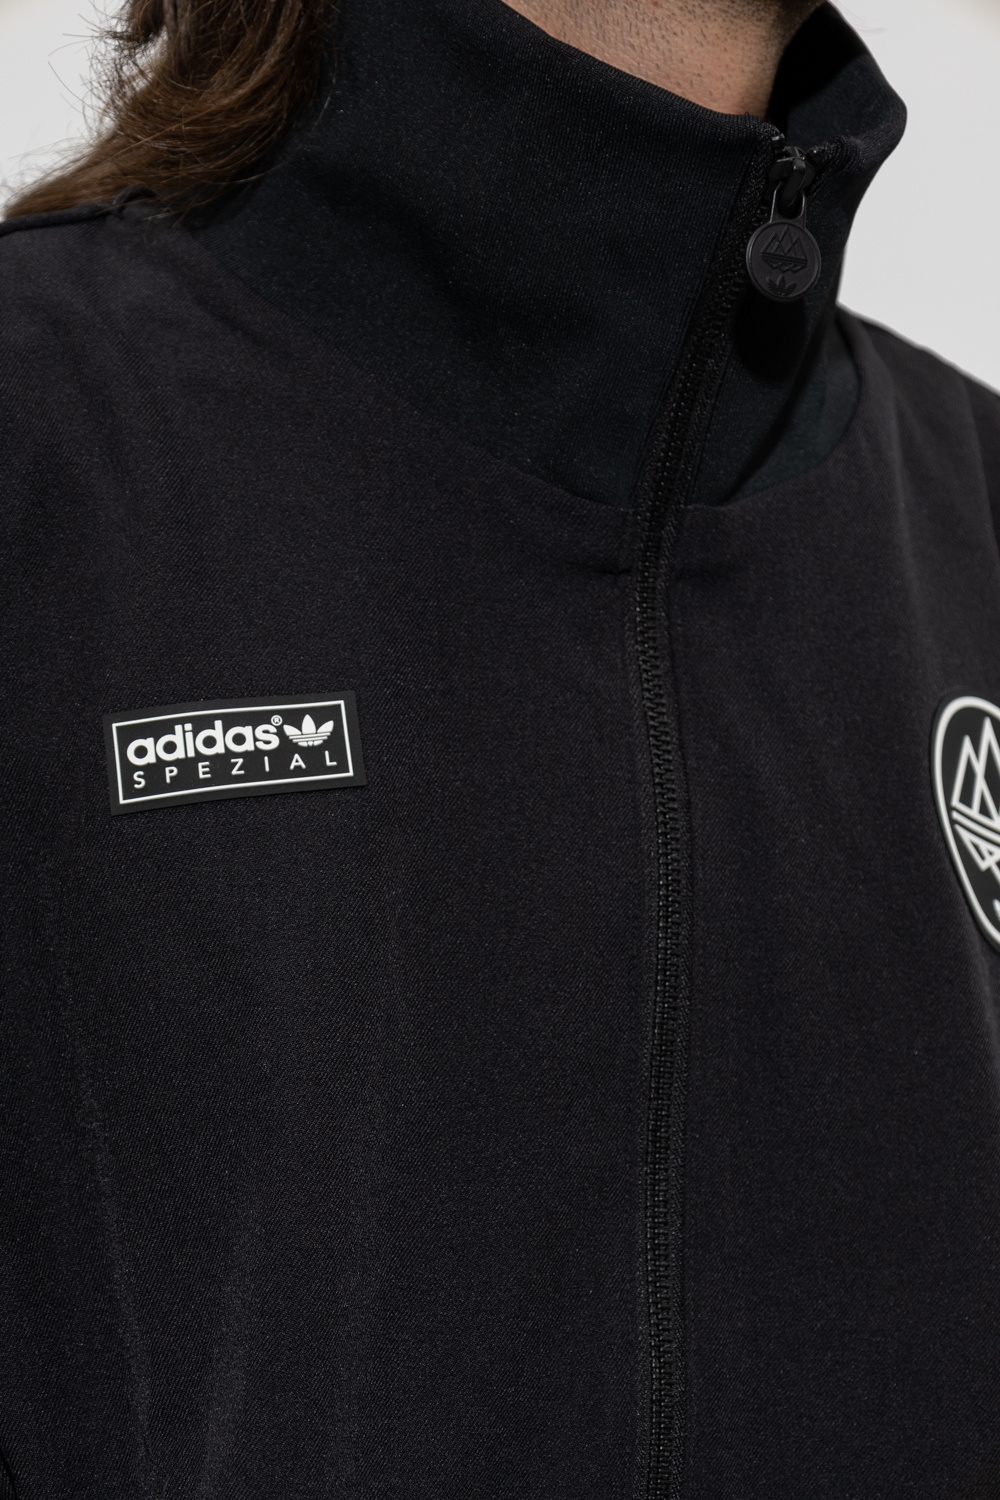 ADIDAS Originals 'Marnach' track jacket | Men's Clothing | Vitkac